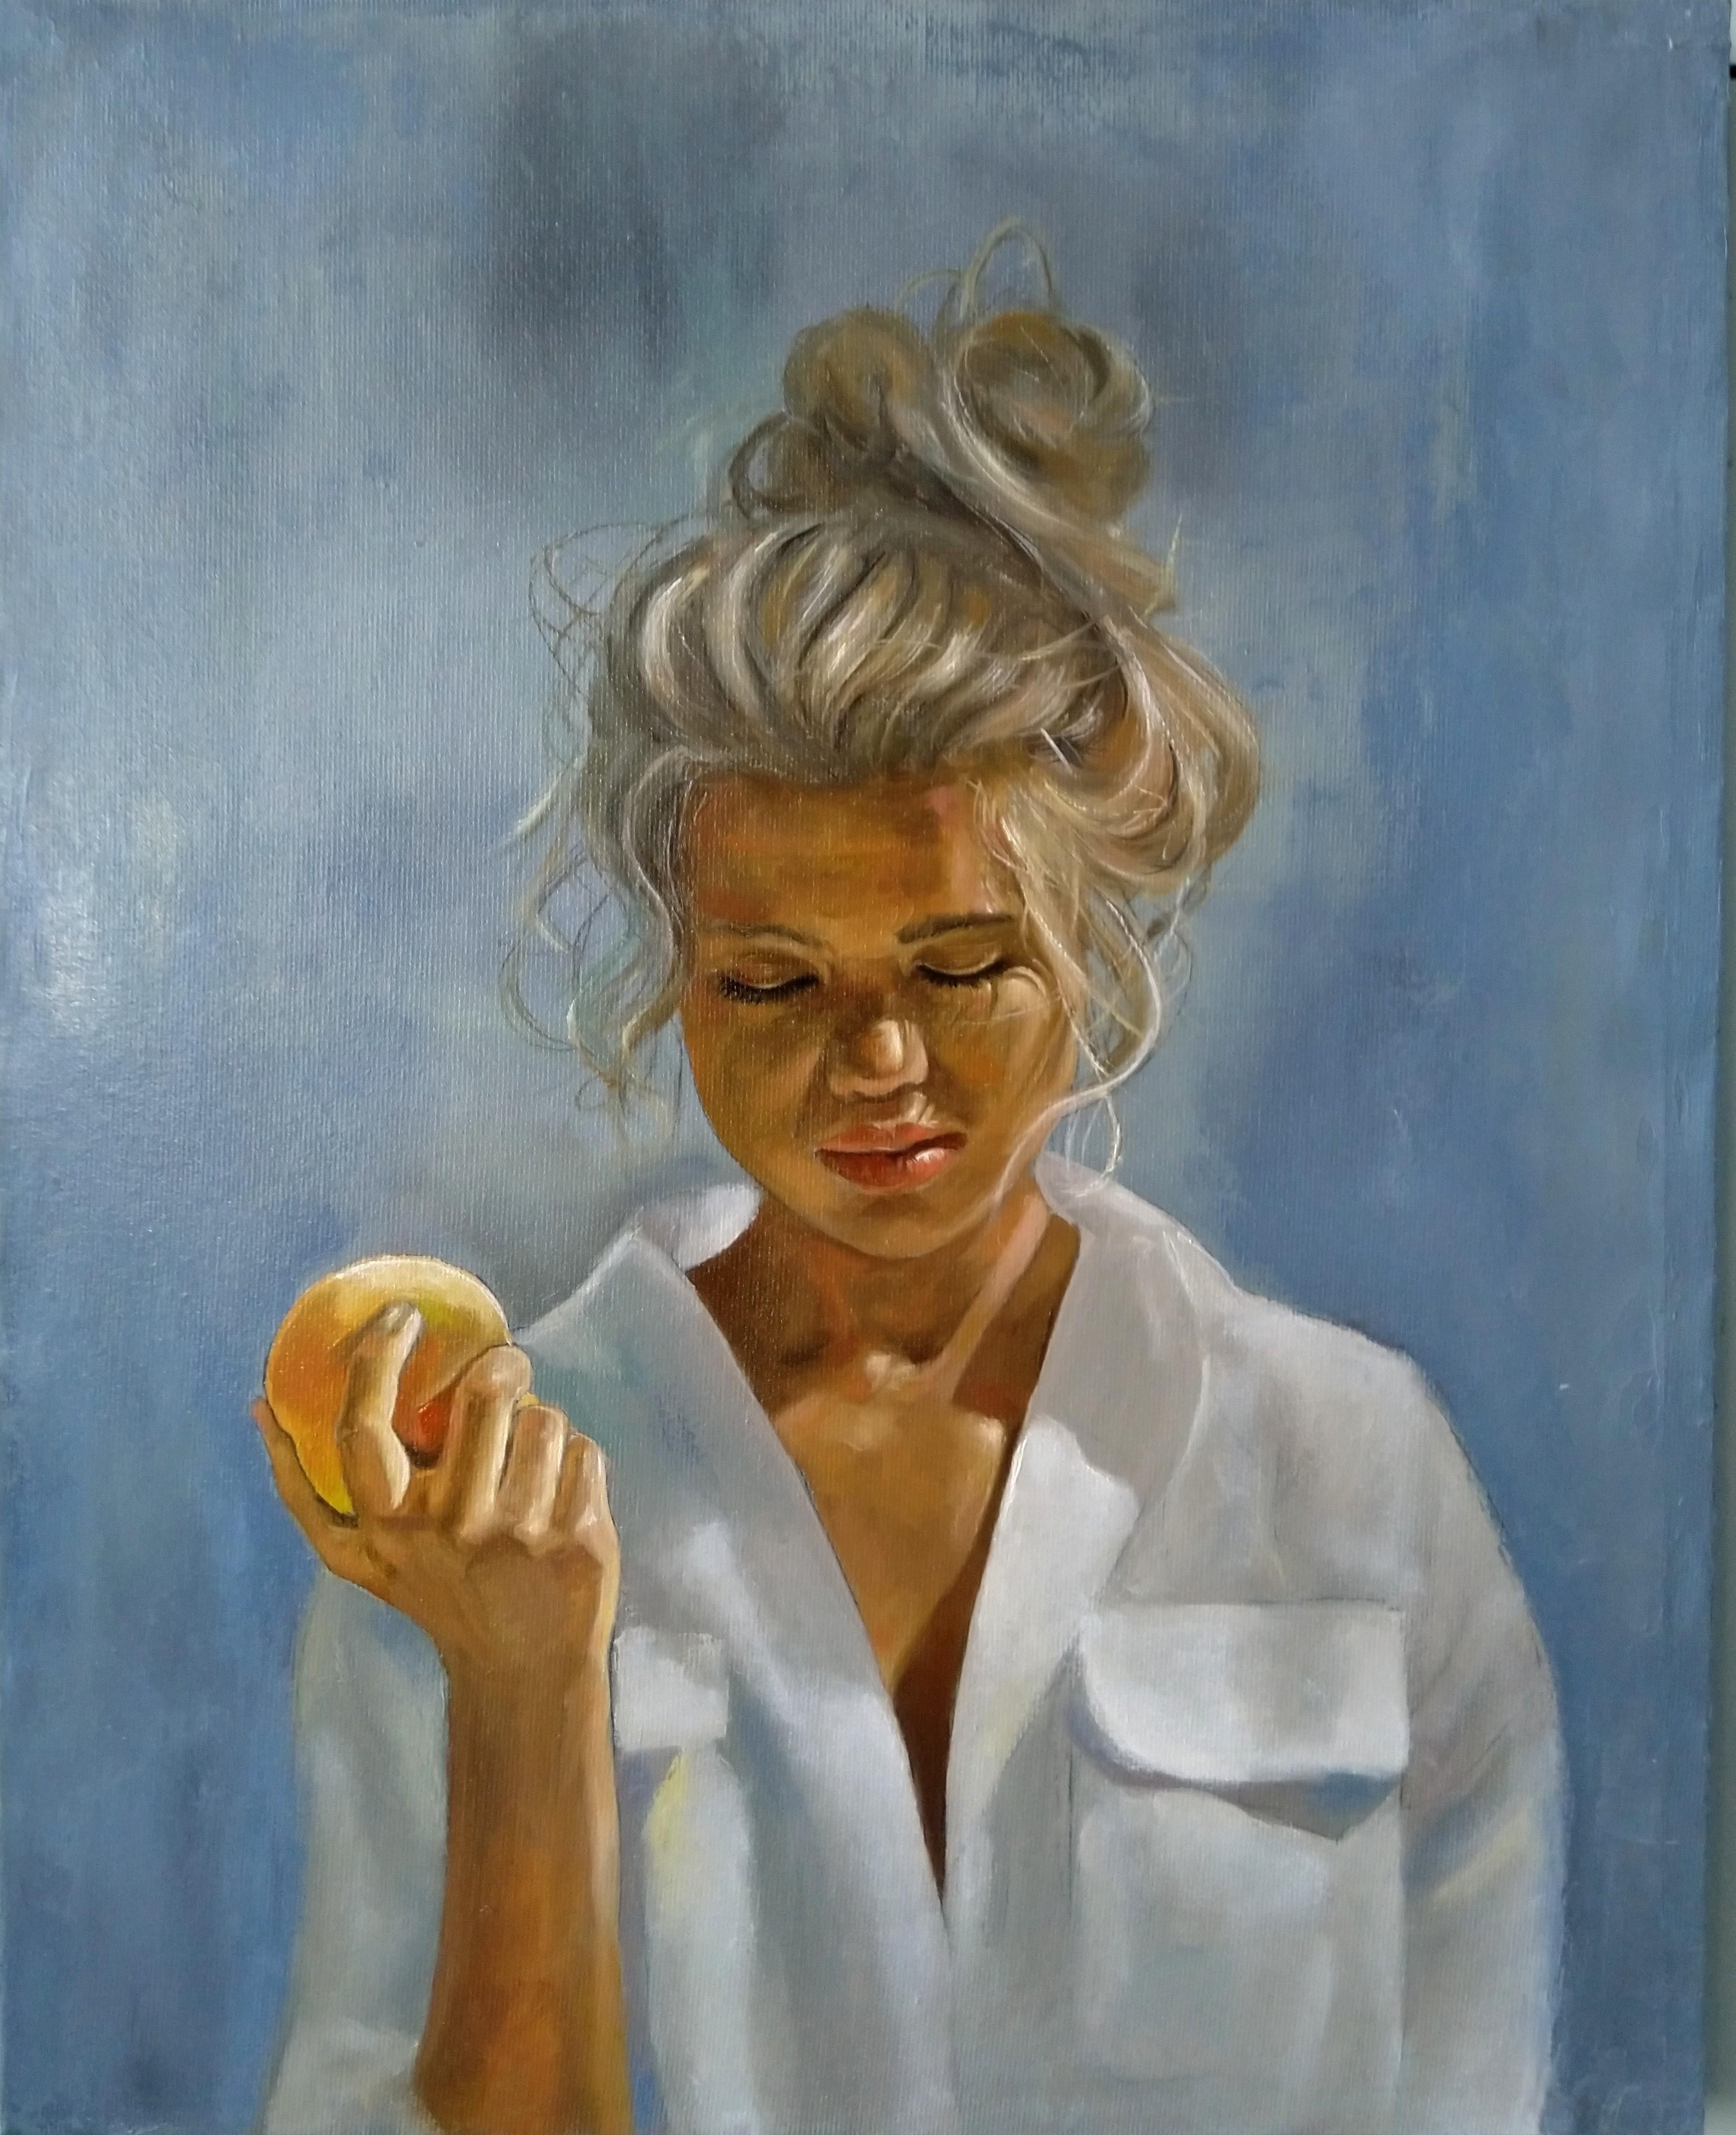 Oil on canvas